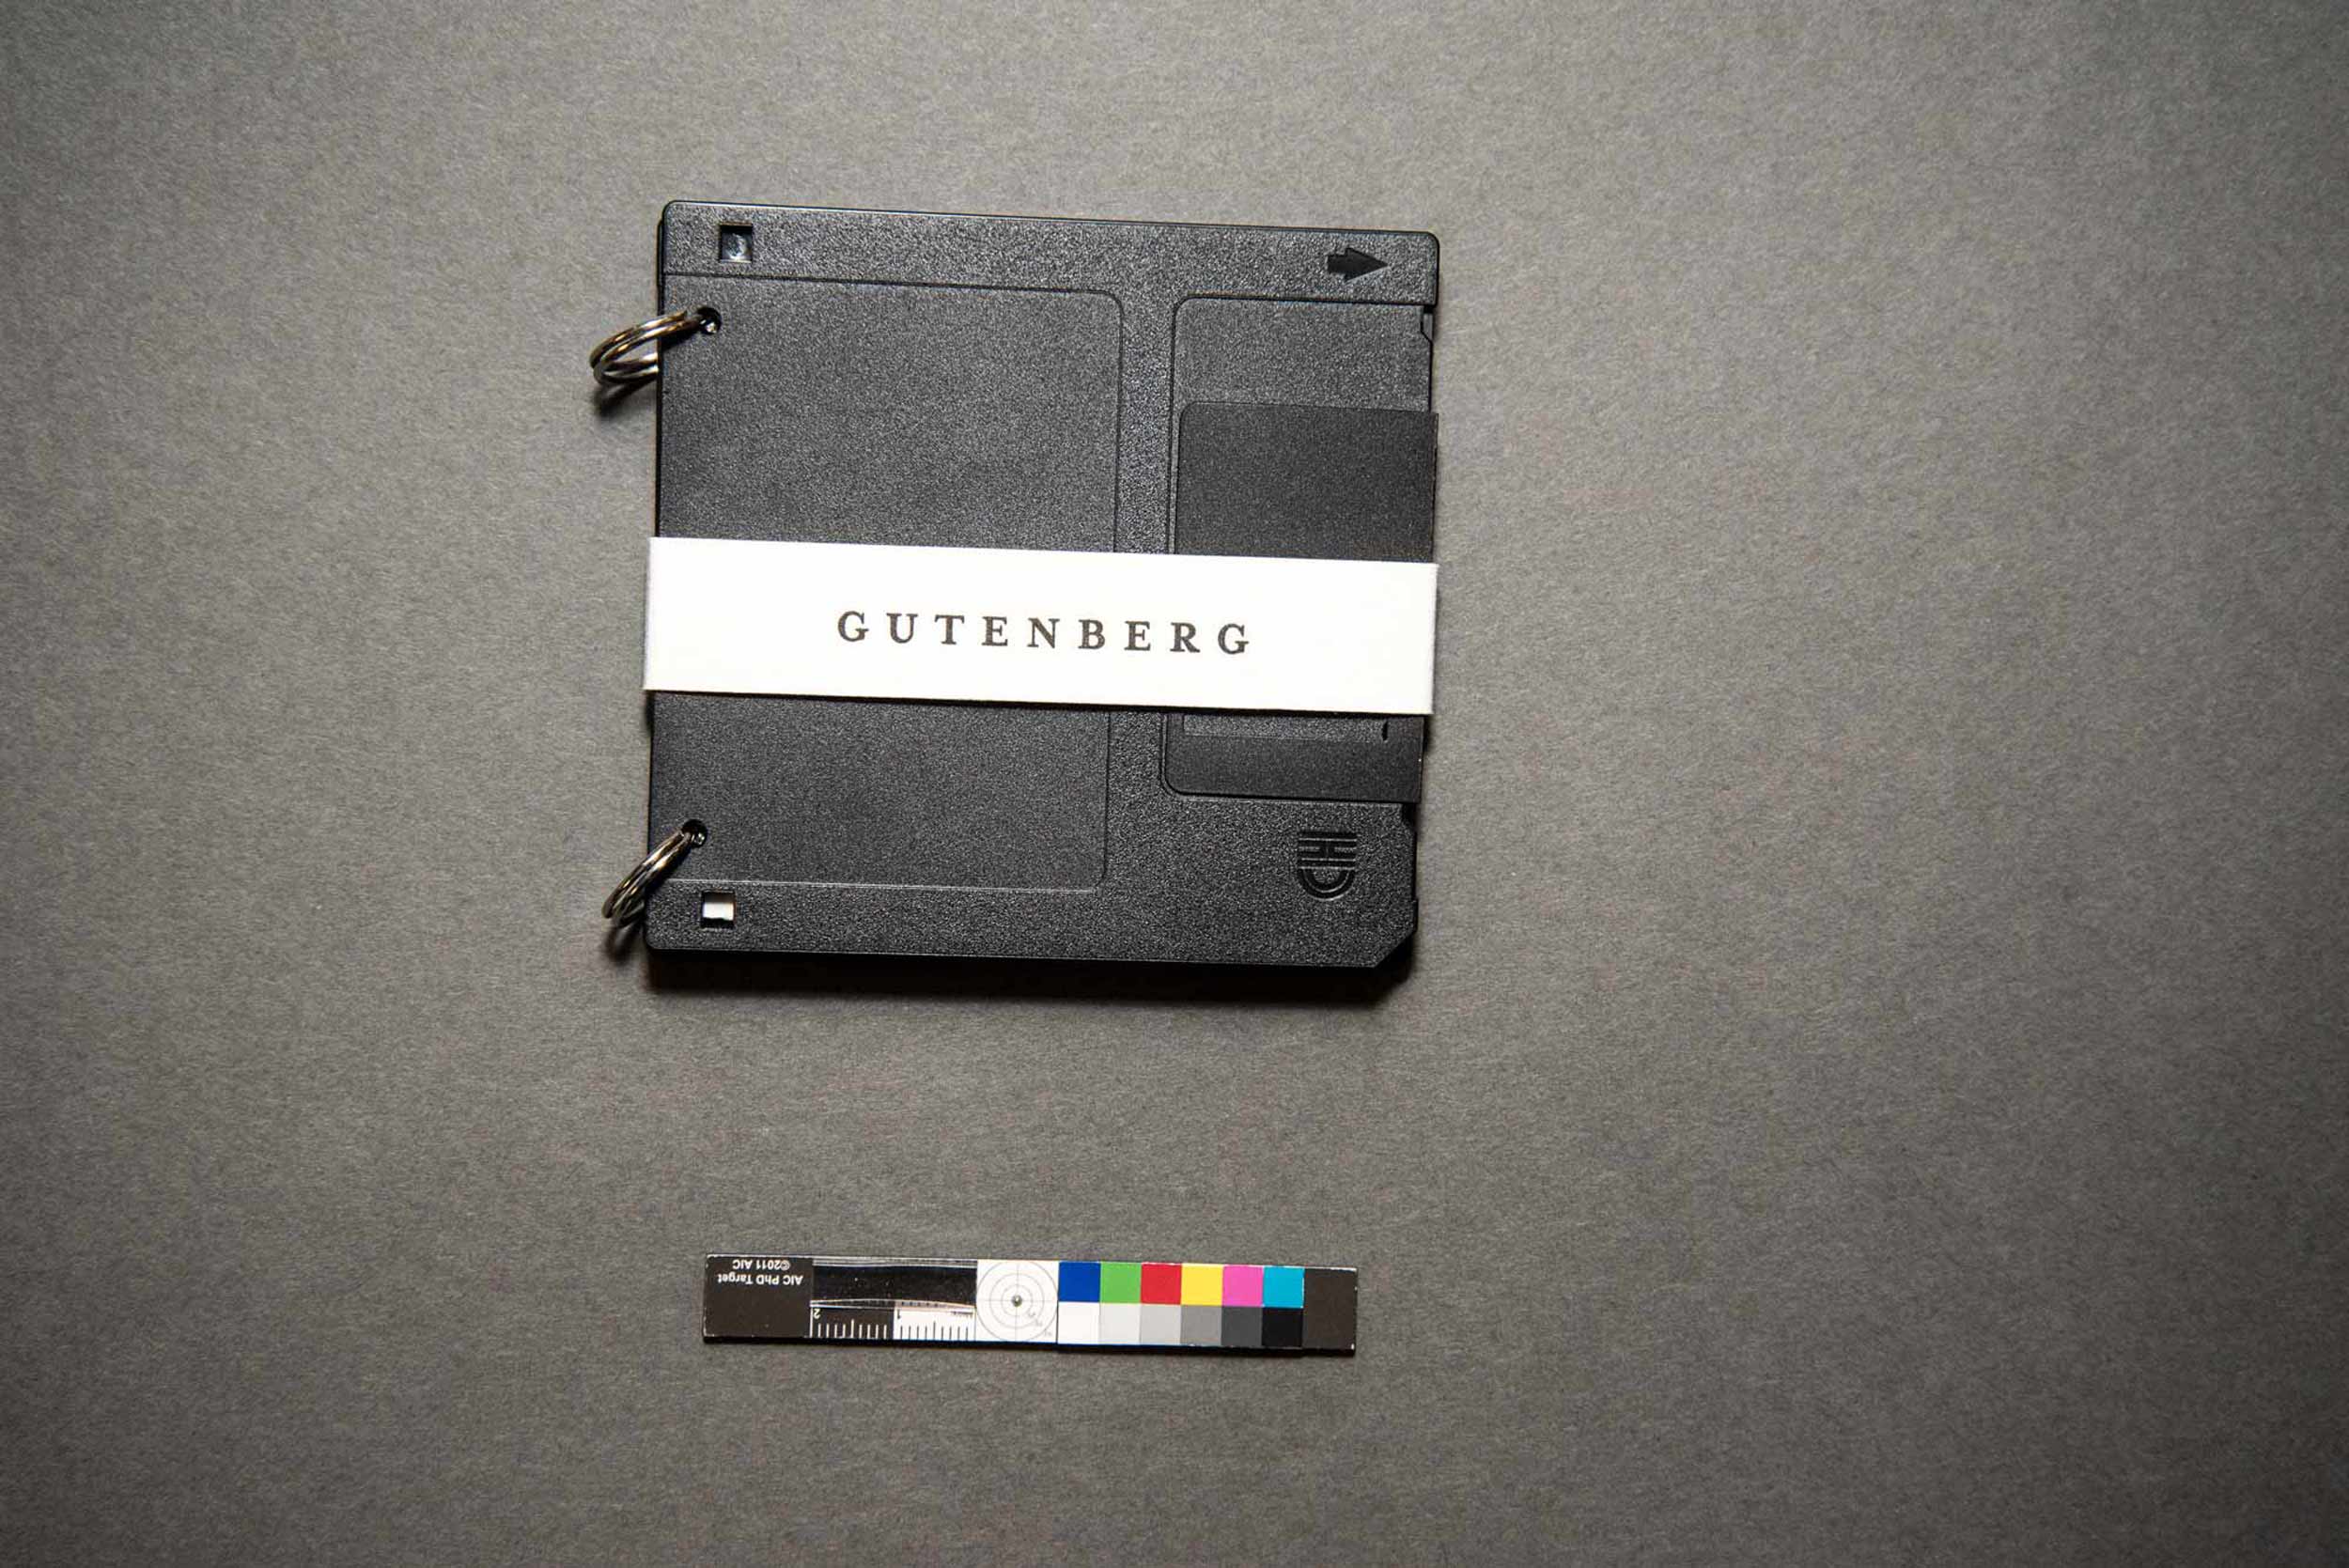 Floppy disk shaped book labeled Gutenberg 